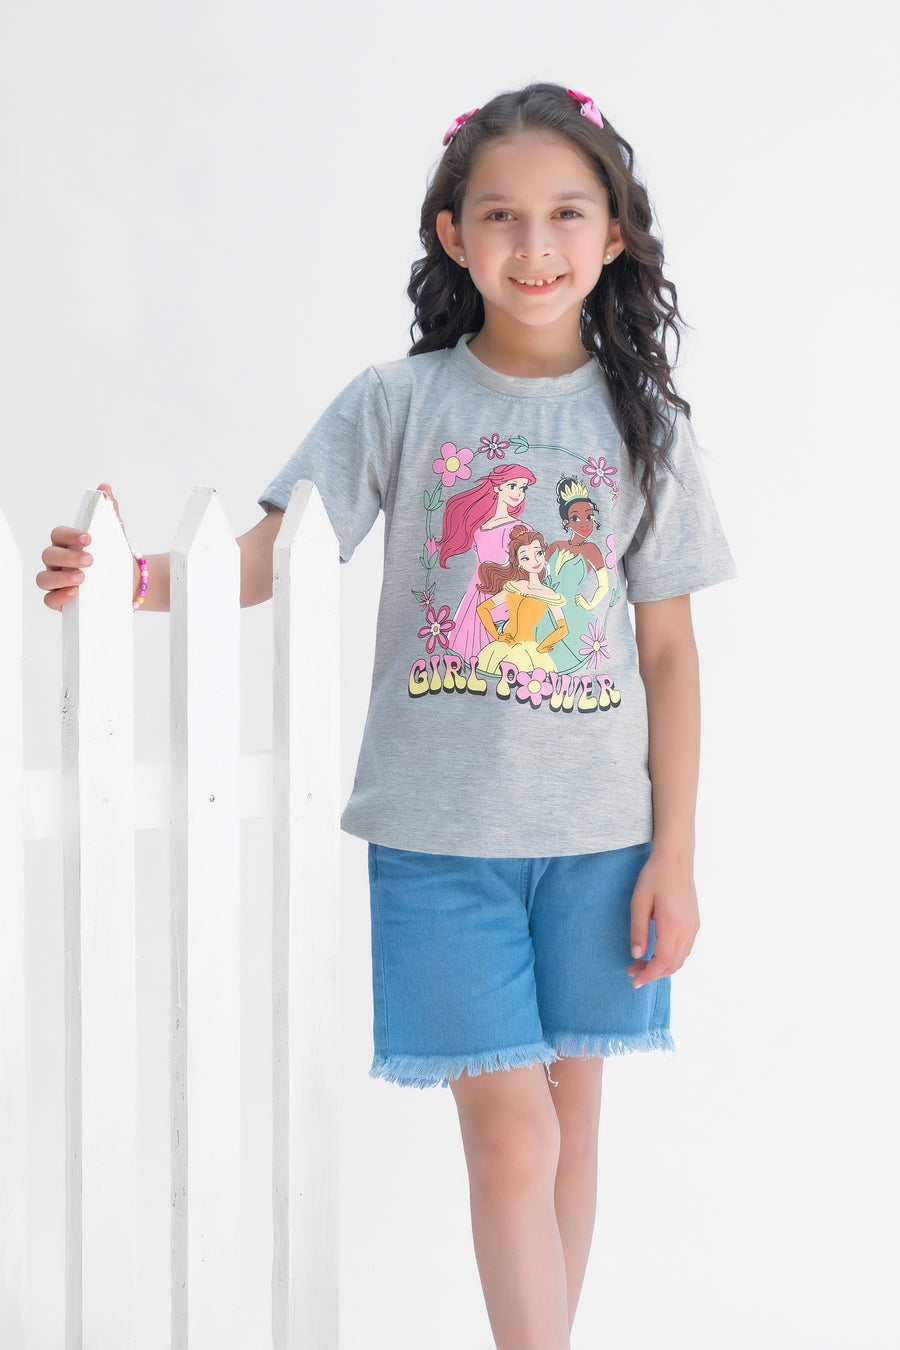 Disney Princess Girl Power Half Sleeves T-shirts for Kids - Grey